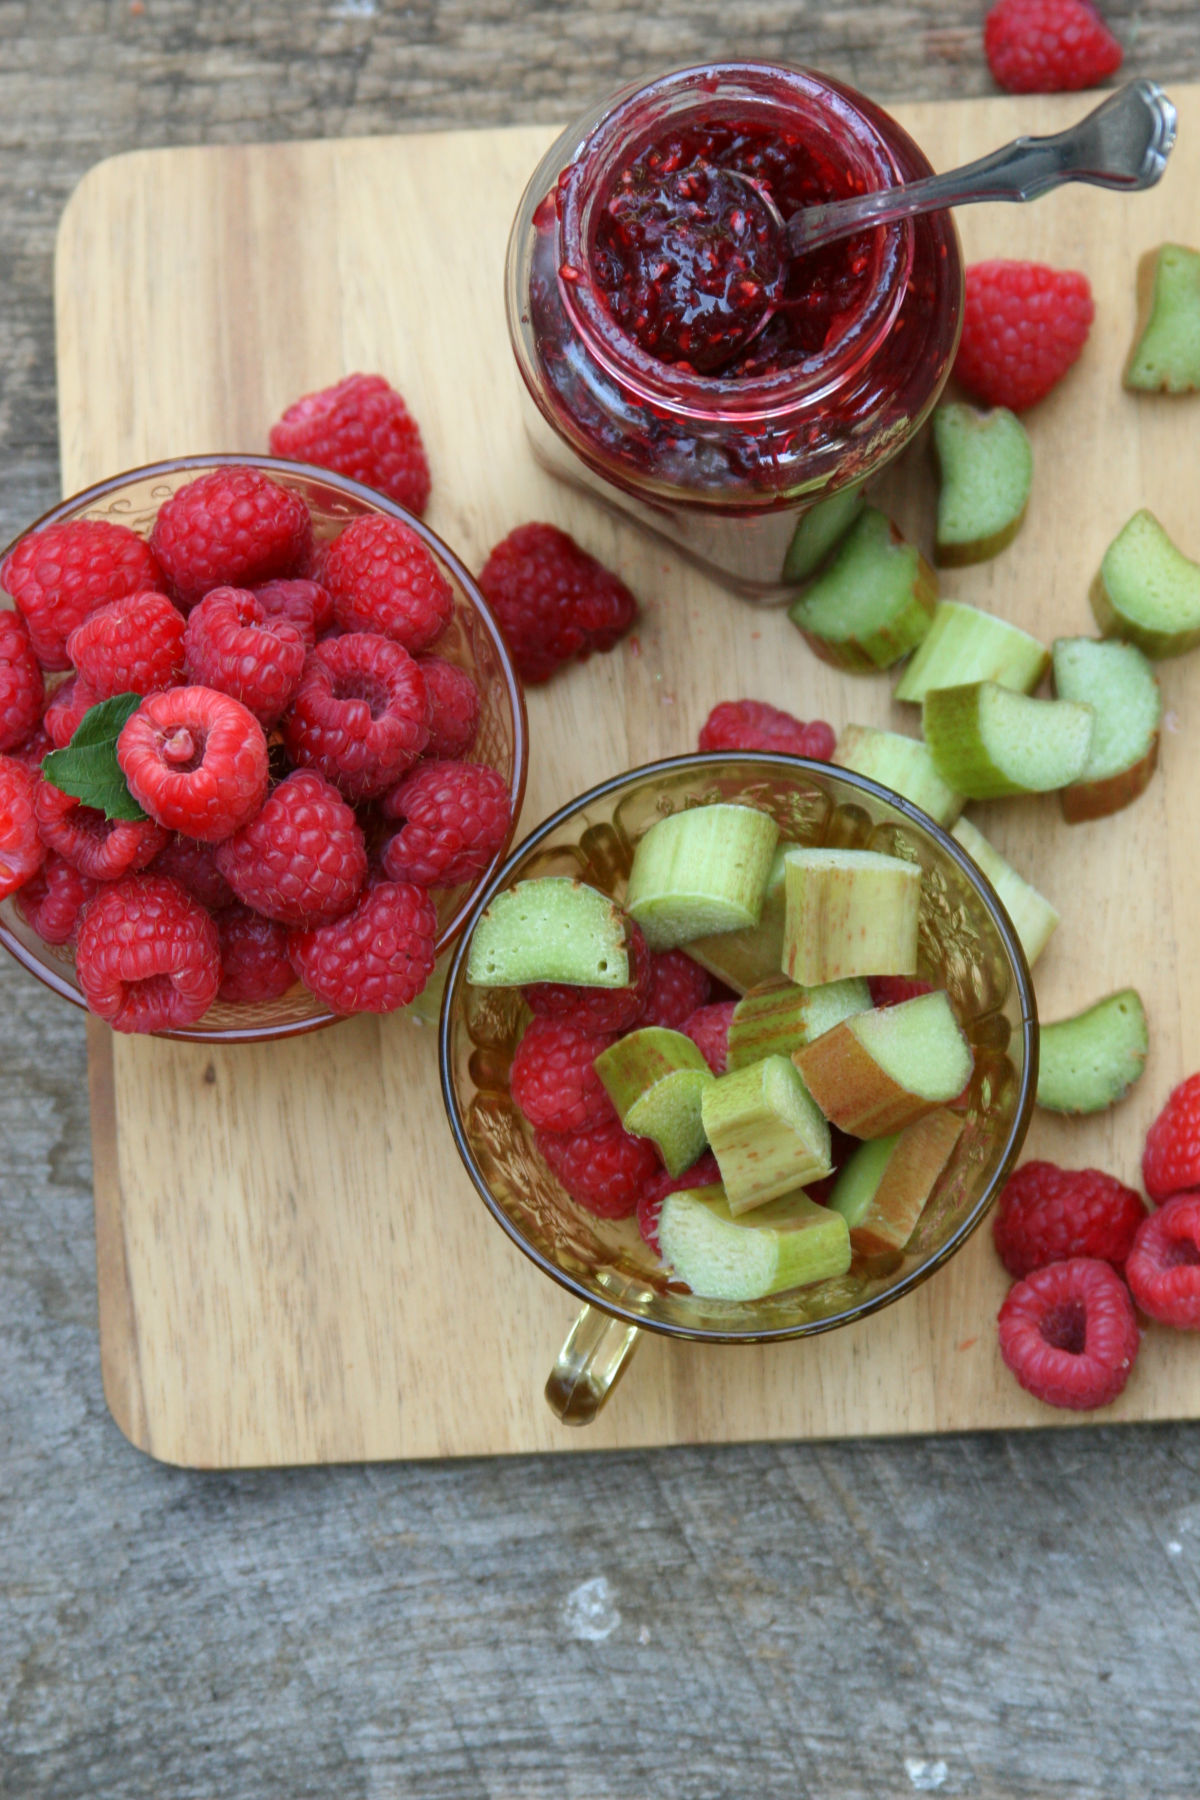 Raspberry rhubarb jam in glass jar with spoon, raspberries and rhubarb pieces in glass Depression glass tea cups.